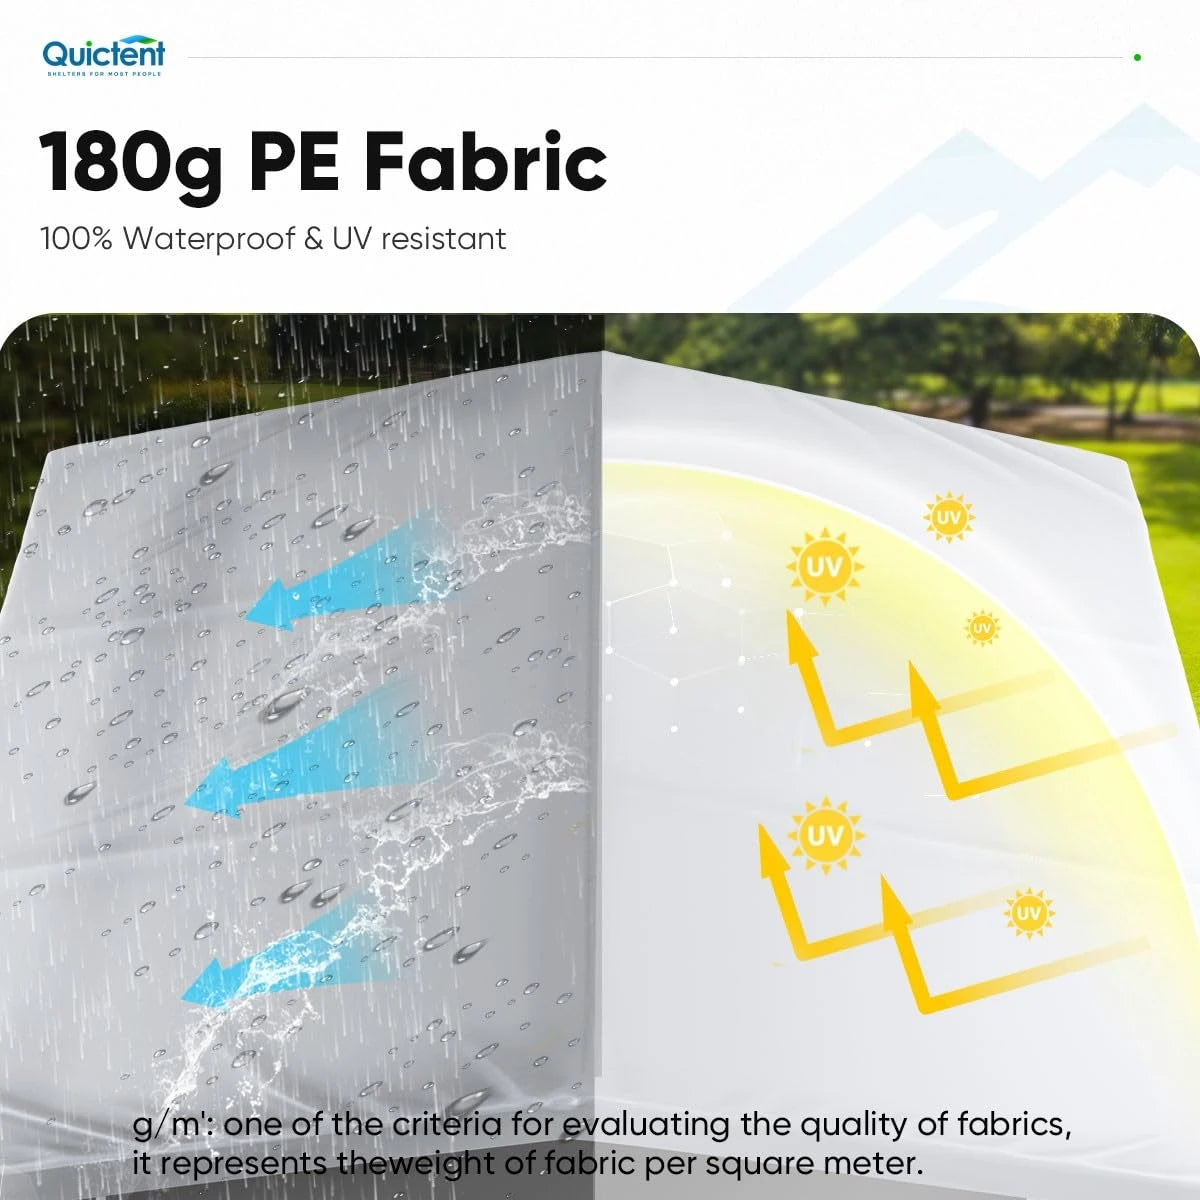 180g imported PE fabric